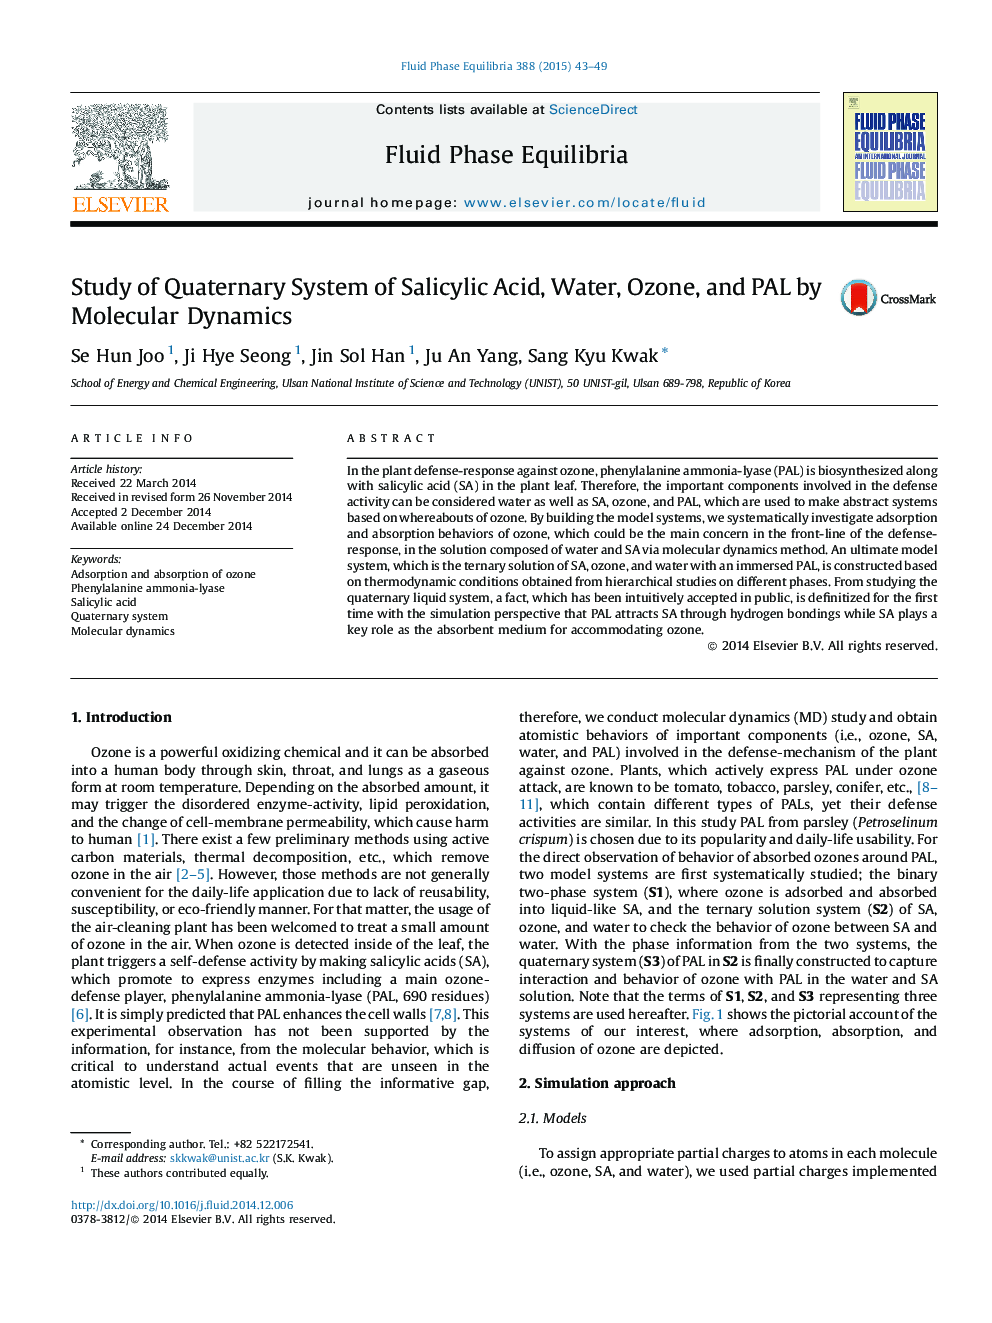 Study of Quaternary System of Salicylic Acid, Water, Ozone, and PAL by Molecular Dynamics